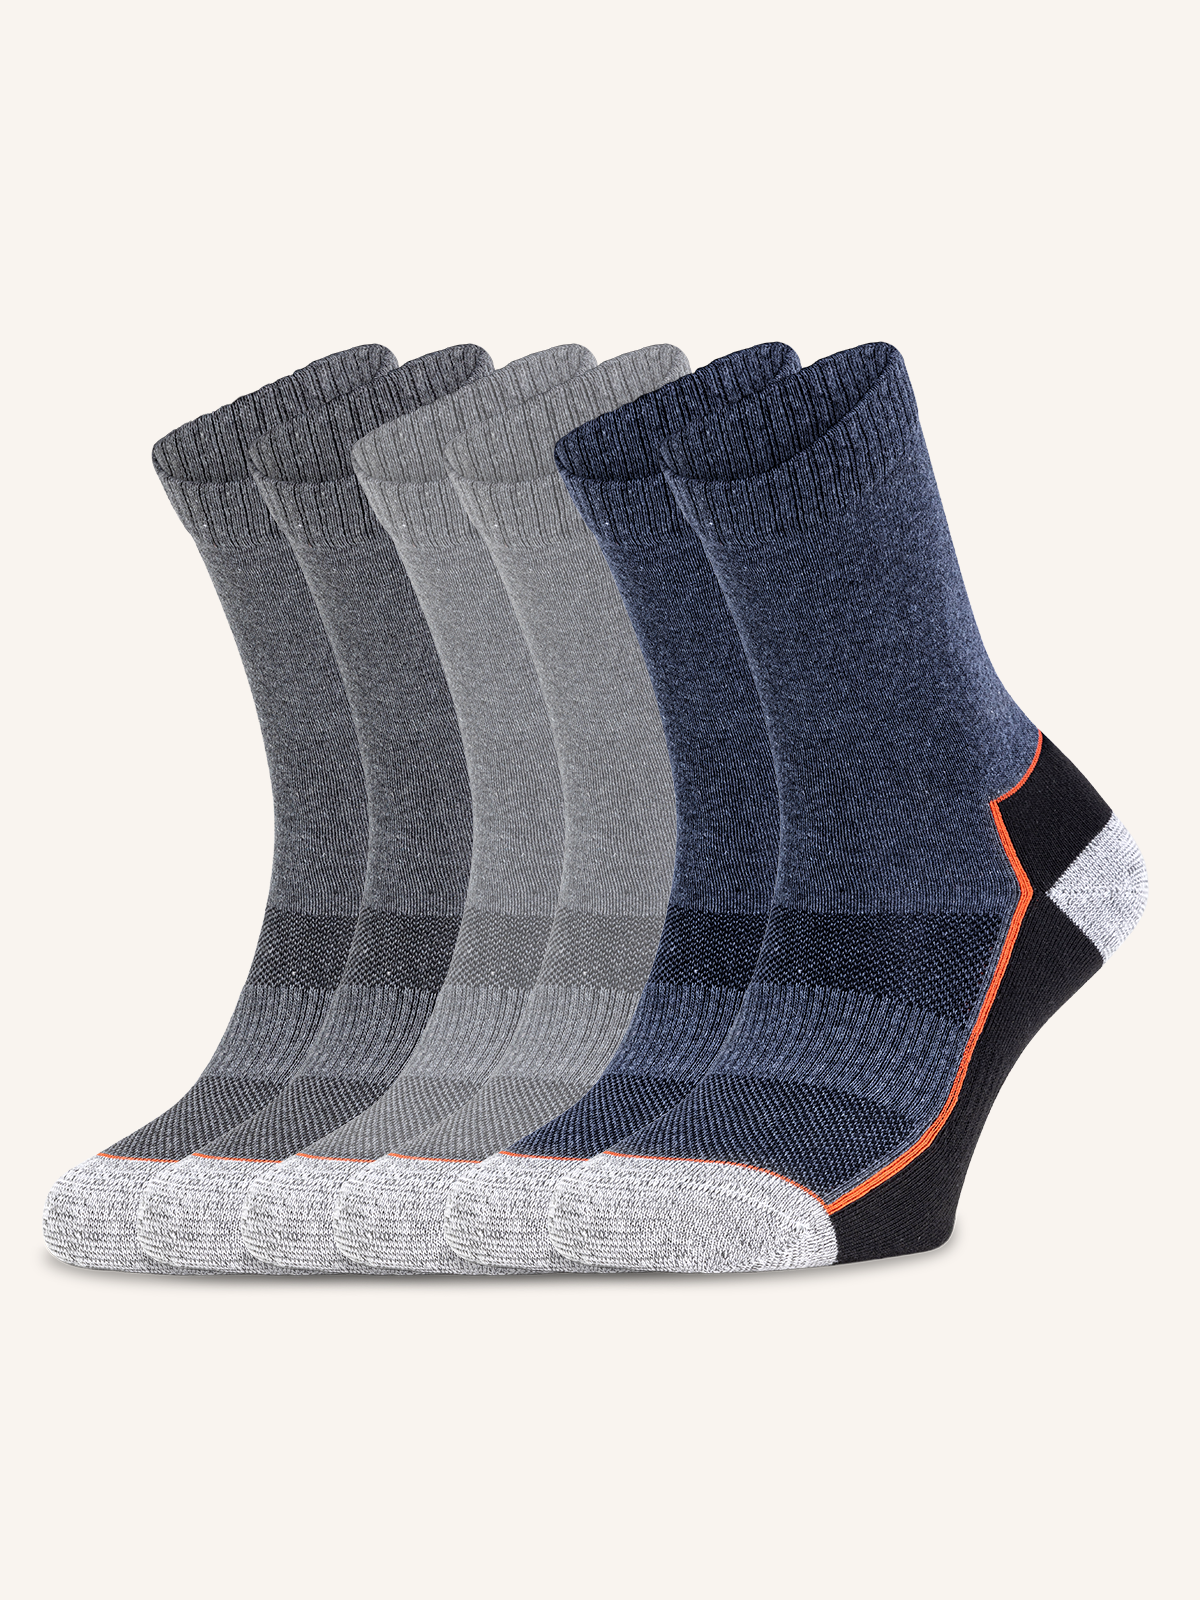 Unisex Stockinette Knit Short Sock | Pack of 6 pairs | JOB 00